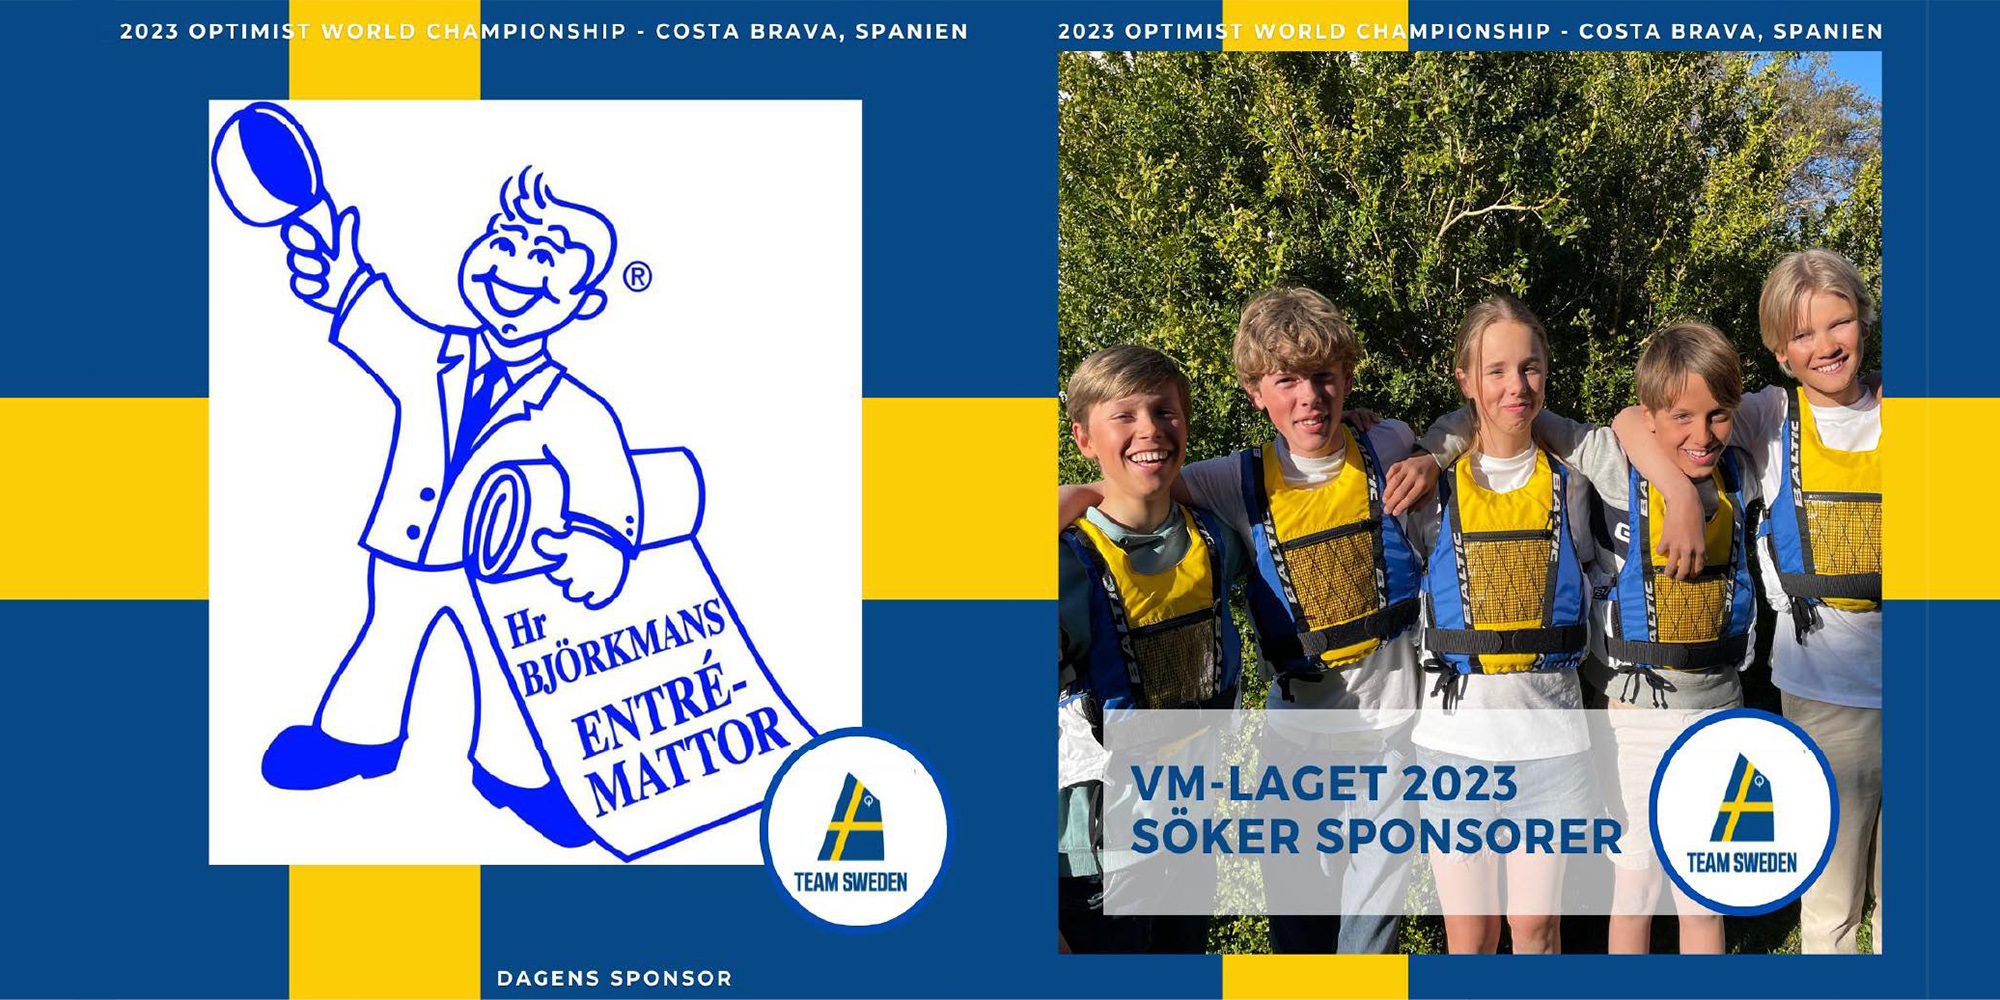 Hr Björkman sponsrar Team Sweden Optimist World Championship